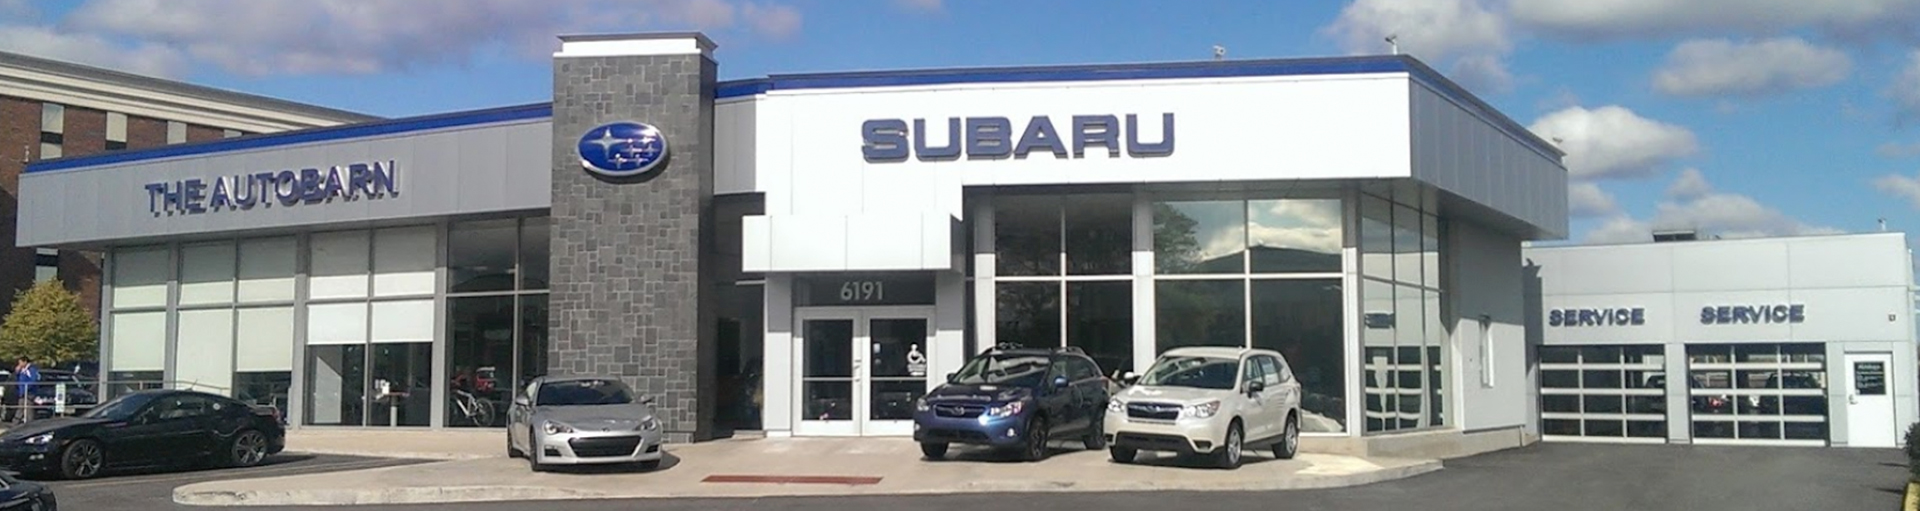 The Autobarn Subaru of Countryside Recall Department